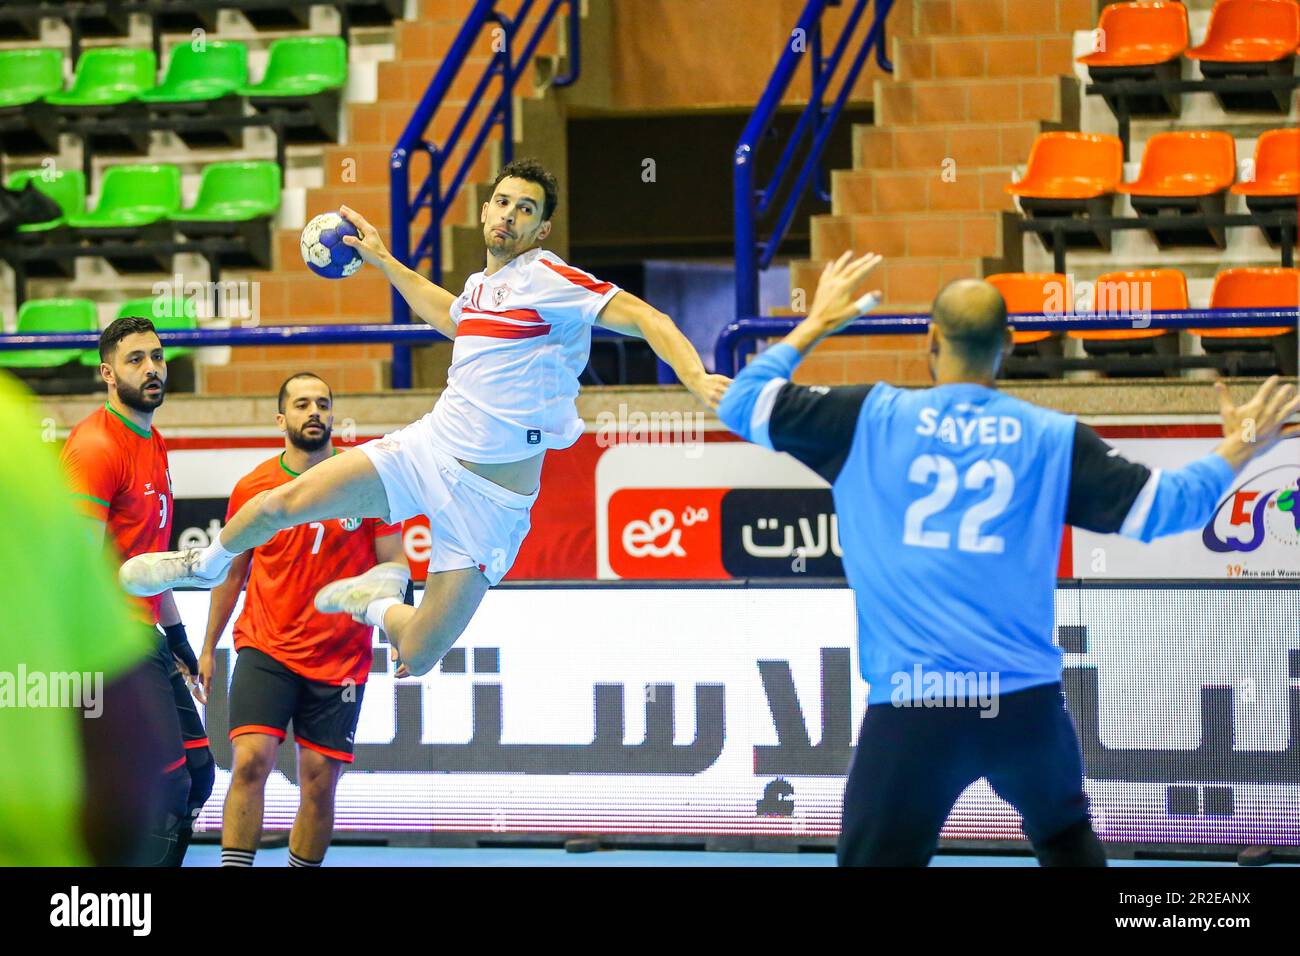 The 2023 men's African Handball confederation match between Zamalek and Sporting Club in Cairo, Egypt. Credit: Majority World CIC/Alamy Live News Stock Photo